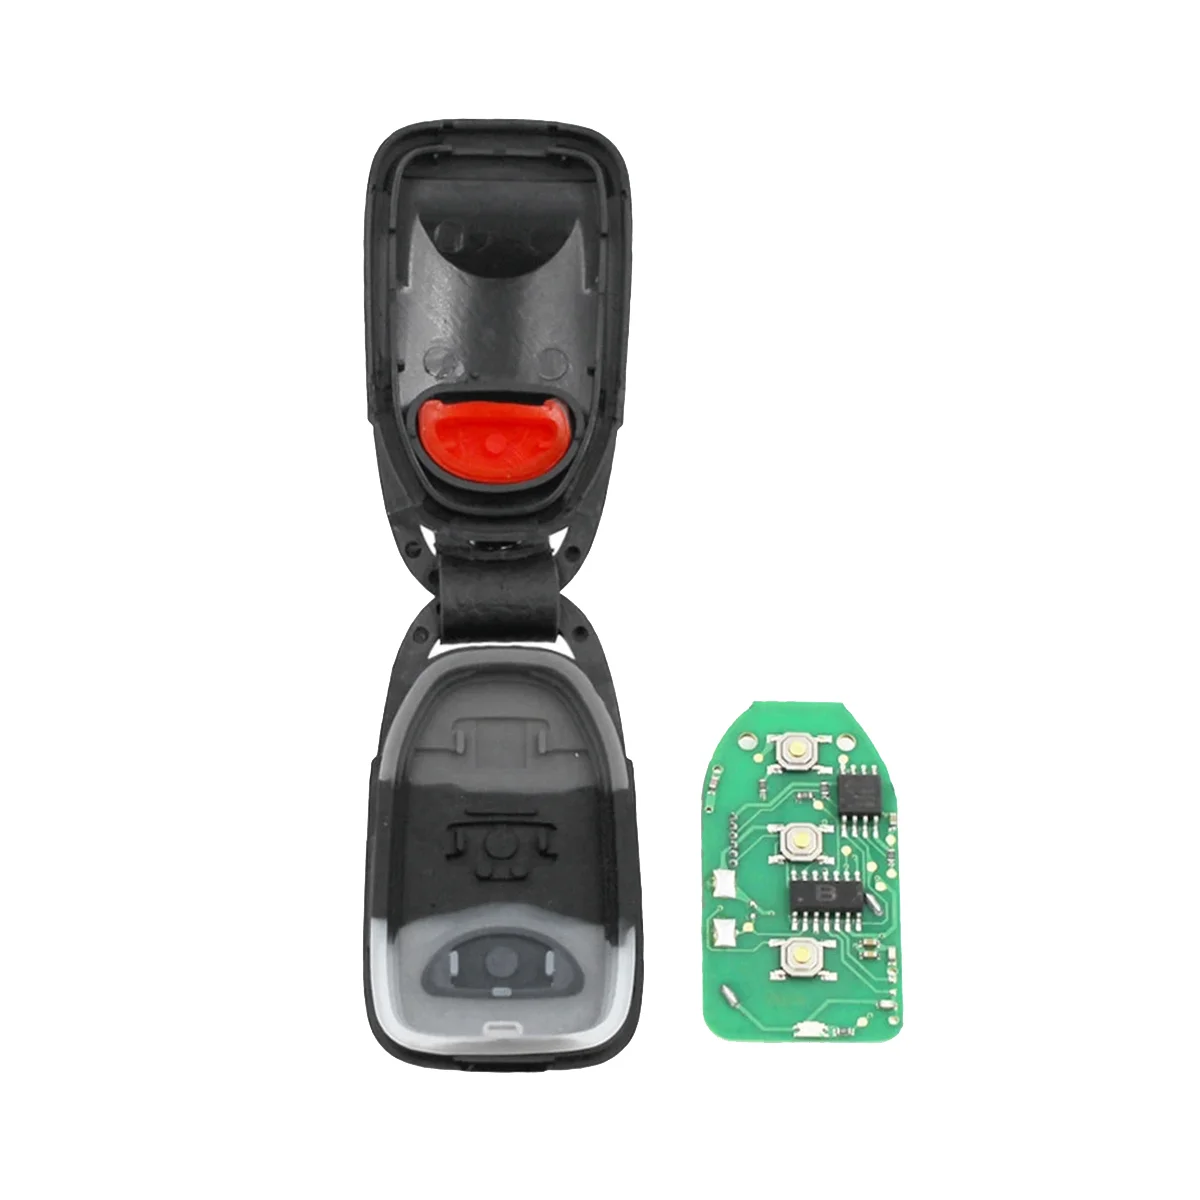 

KEYDIY B09-3+1 KD Remote Control Car Key Universal 4 Button for Hyundai KIA for KD900/KD-X2 KD MINI/ URG200